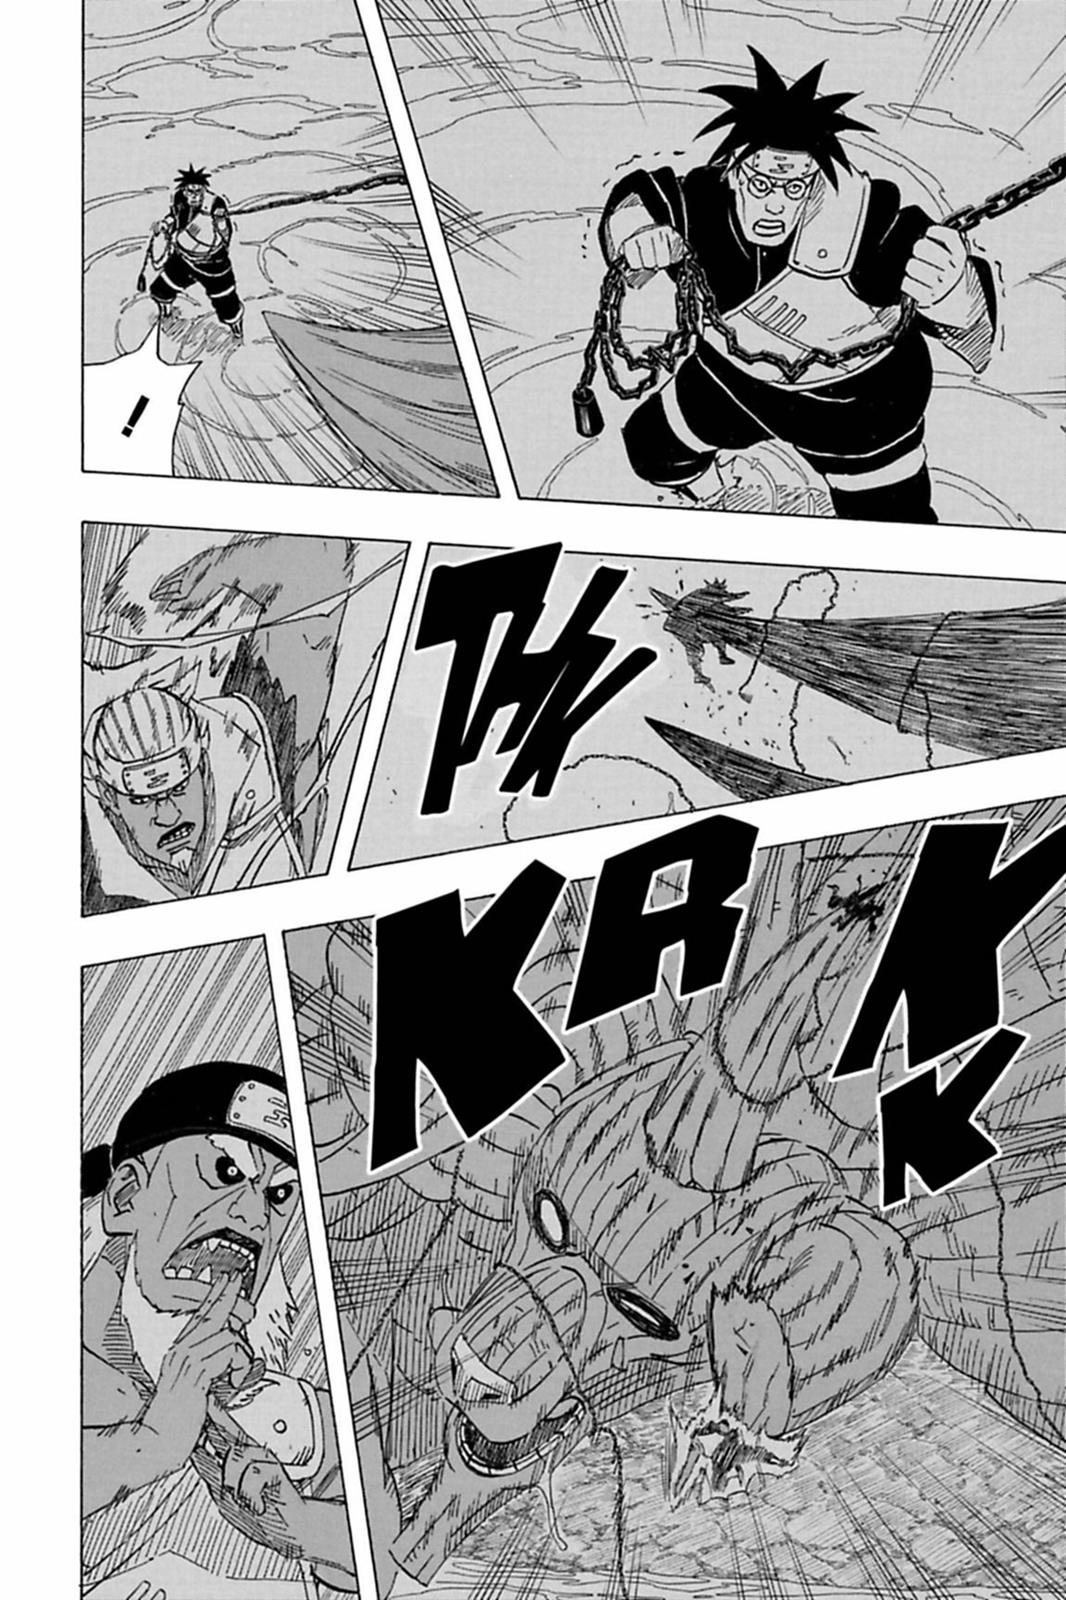 Orochimaru vs Third Raikage - Battles - Comic Vine